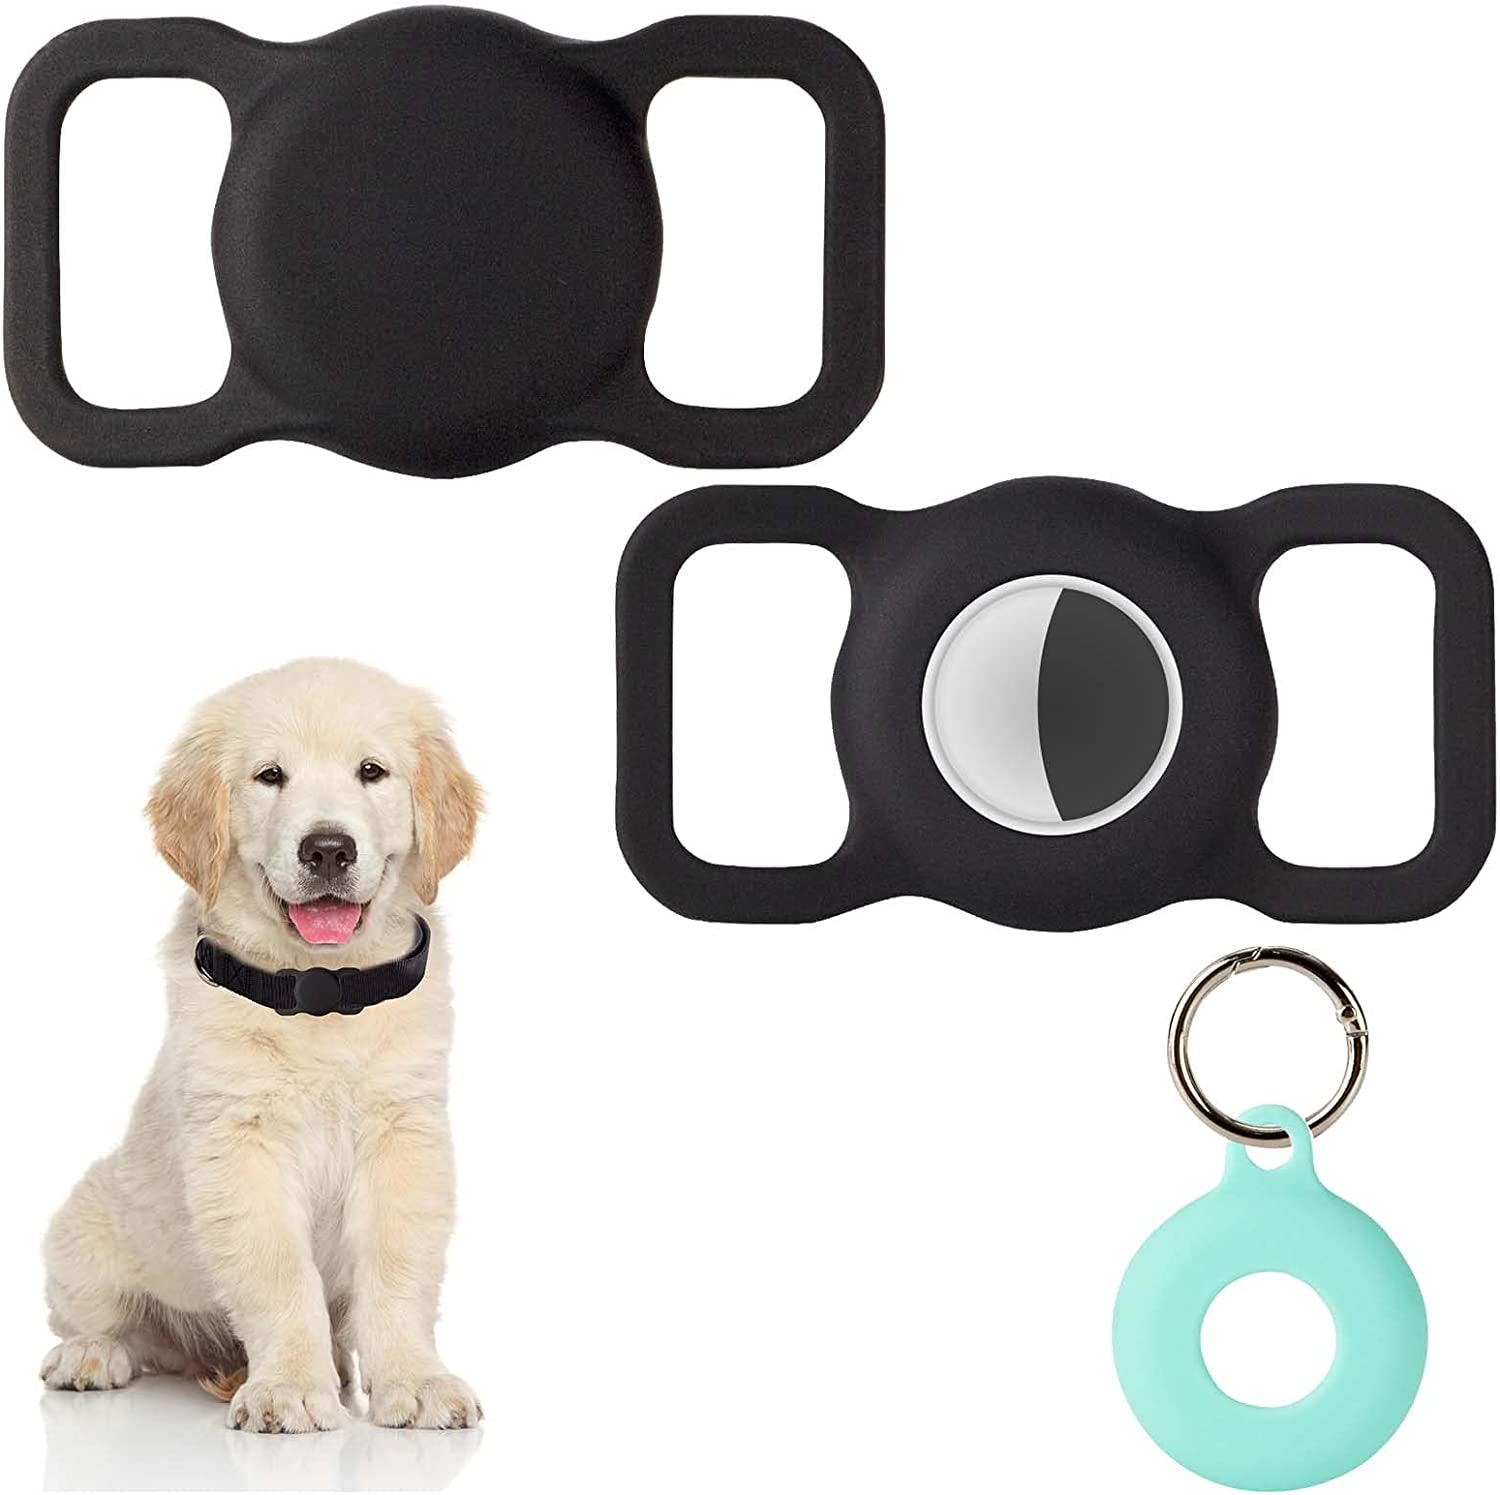 Waterproof Tracker Holder Pet Supplies Tracker Keychain for